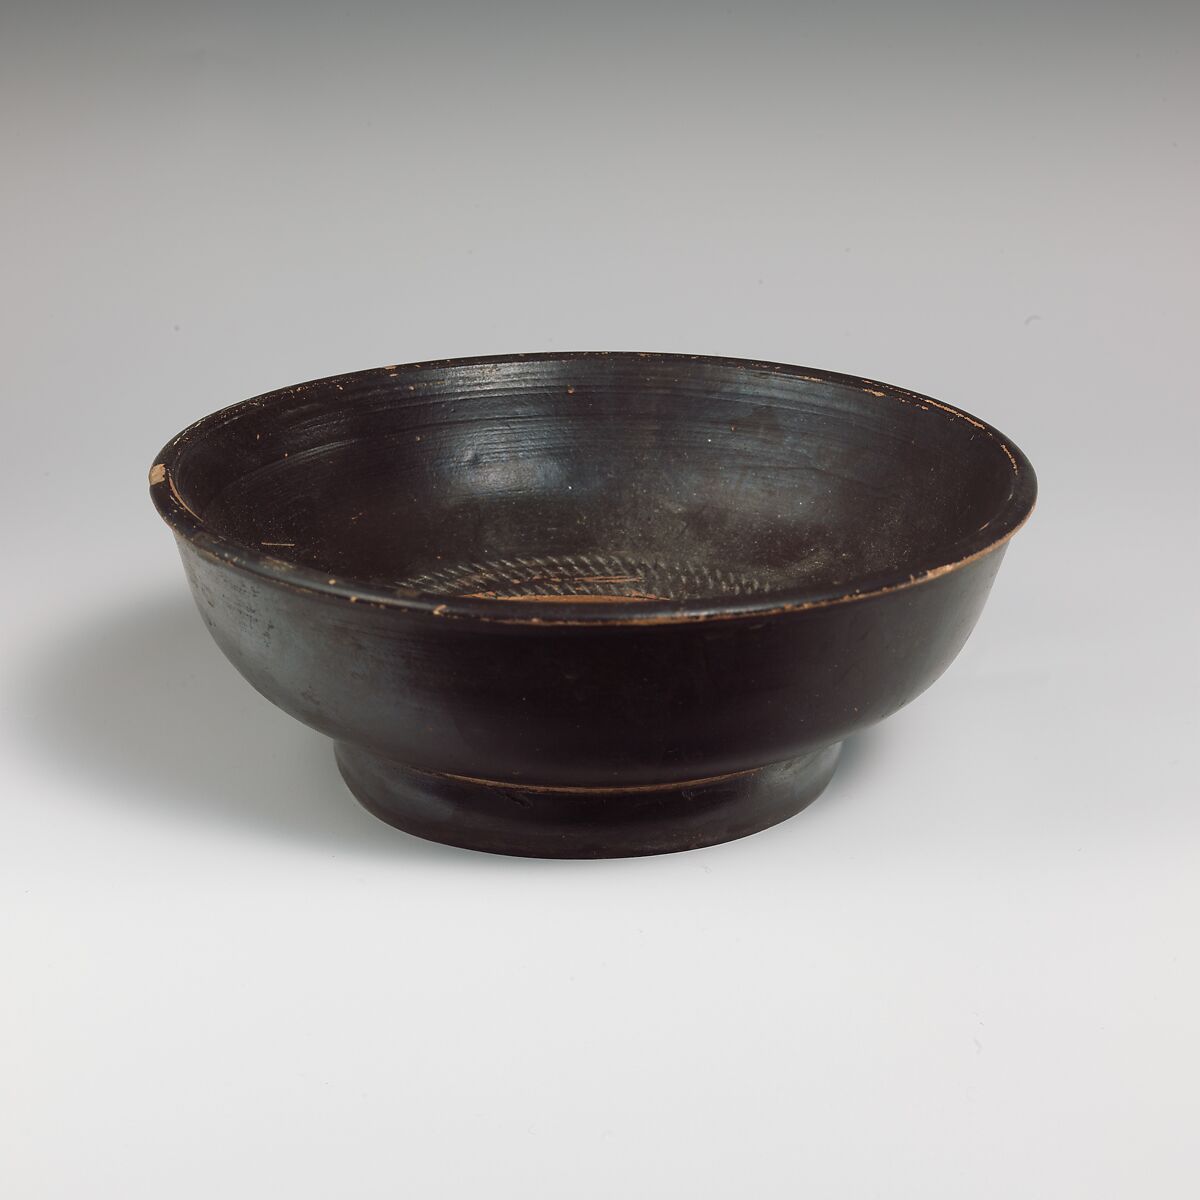 Terracotta bowl, Terracotta, Greek, South Italian, Campanian 